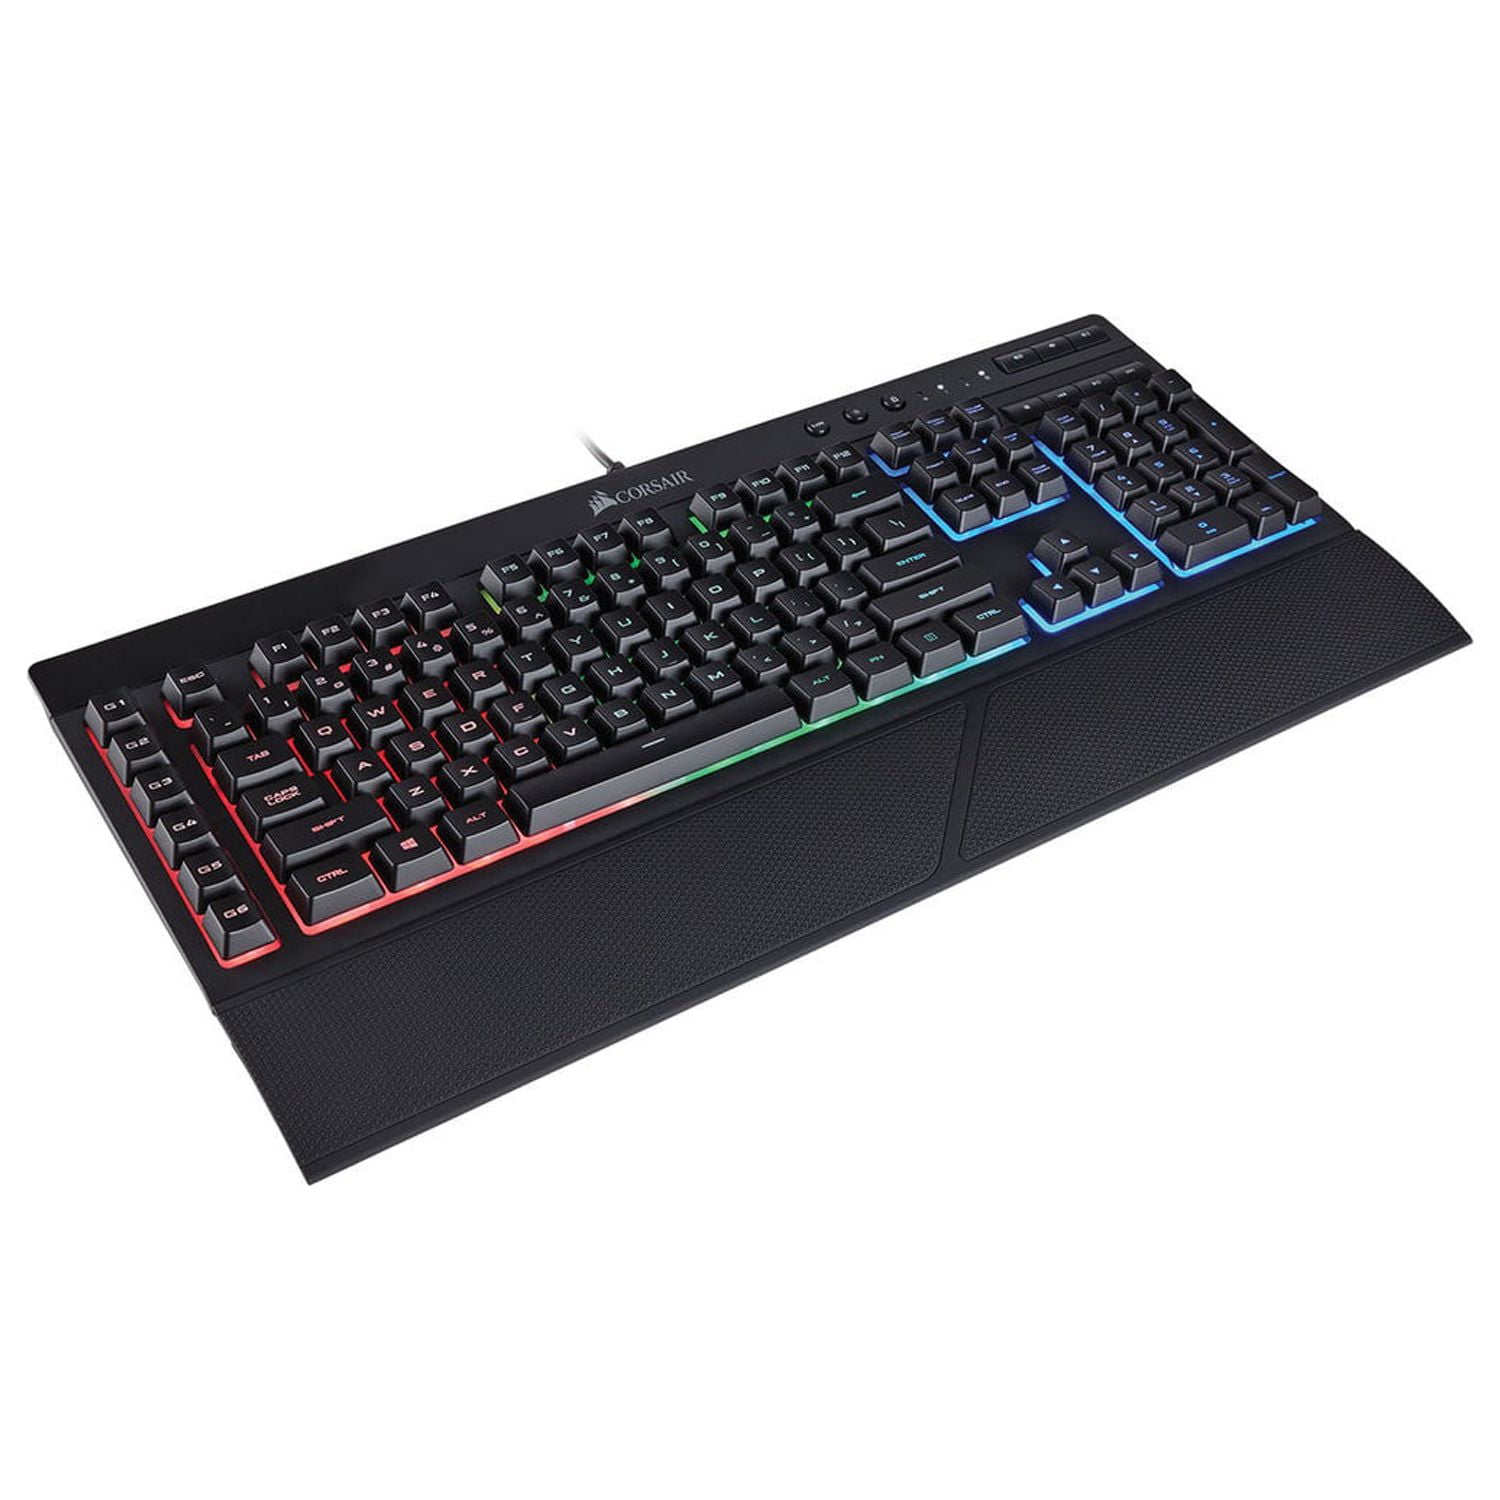 CORSAIR K55 RGB Gaming Keyboard - Aliteq